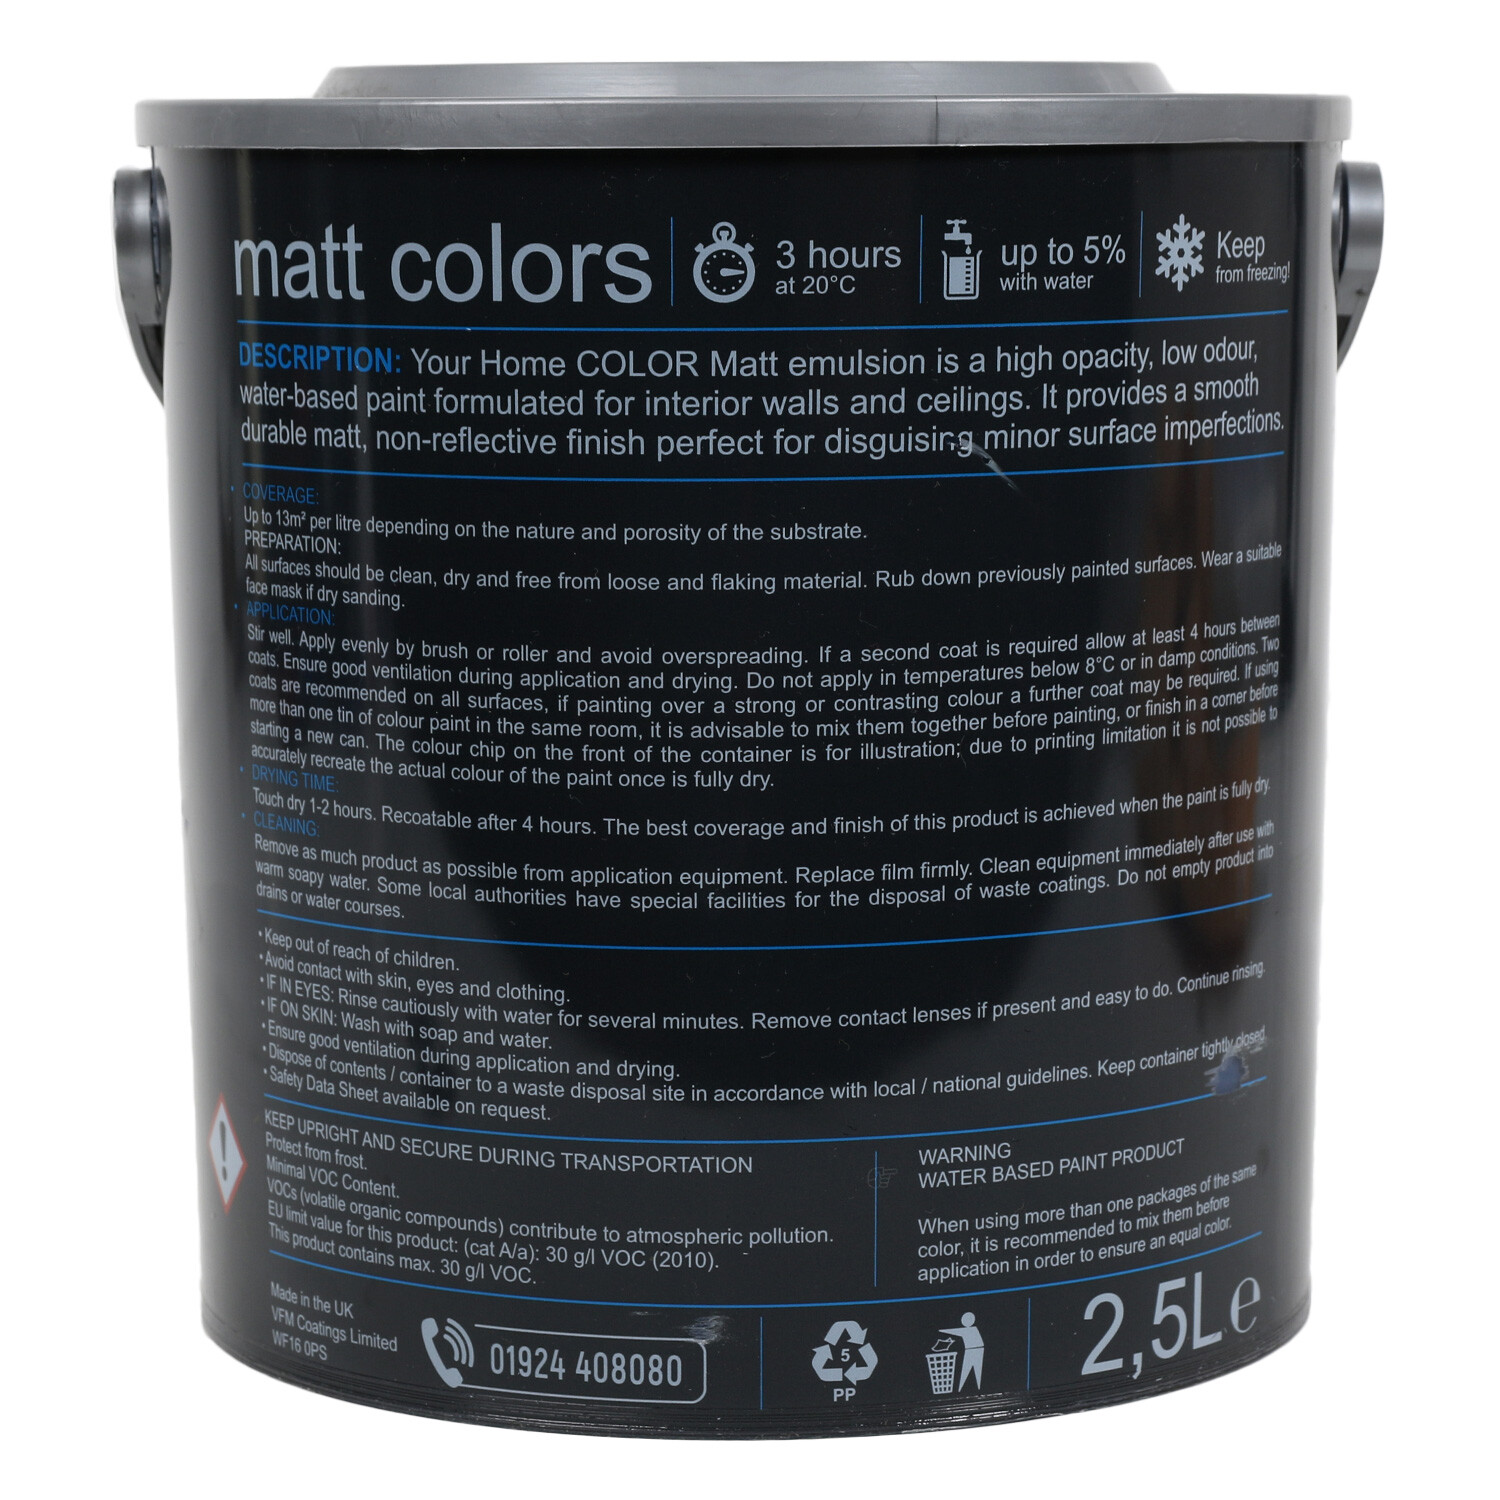 Your Home Walls & Ceilings Sapphire Shadow Matt Emulsion Paint 2.5L Image 2